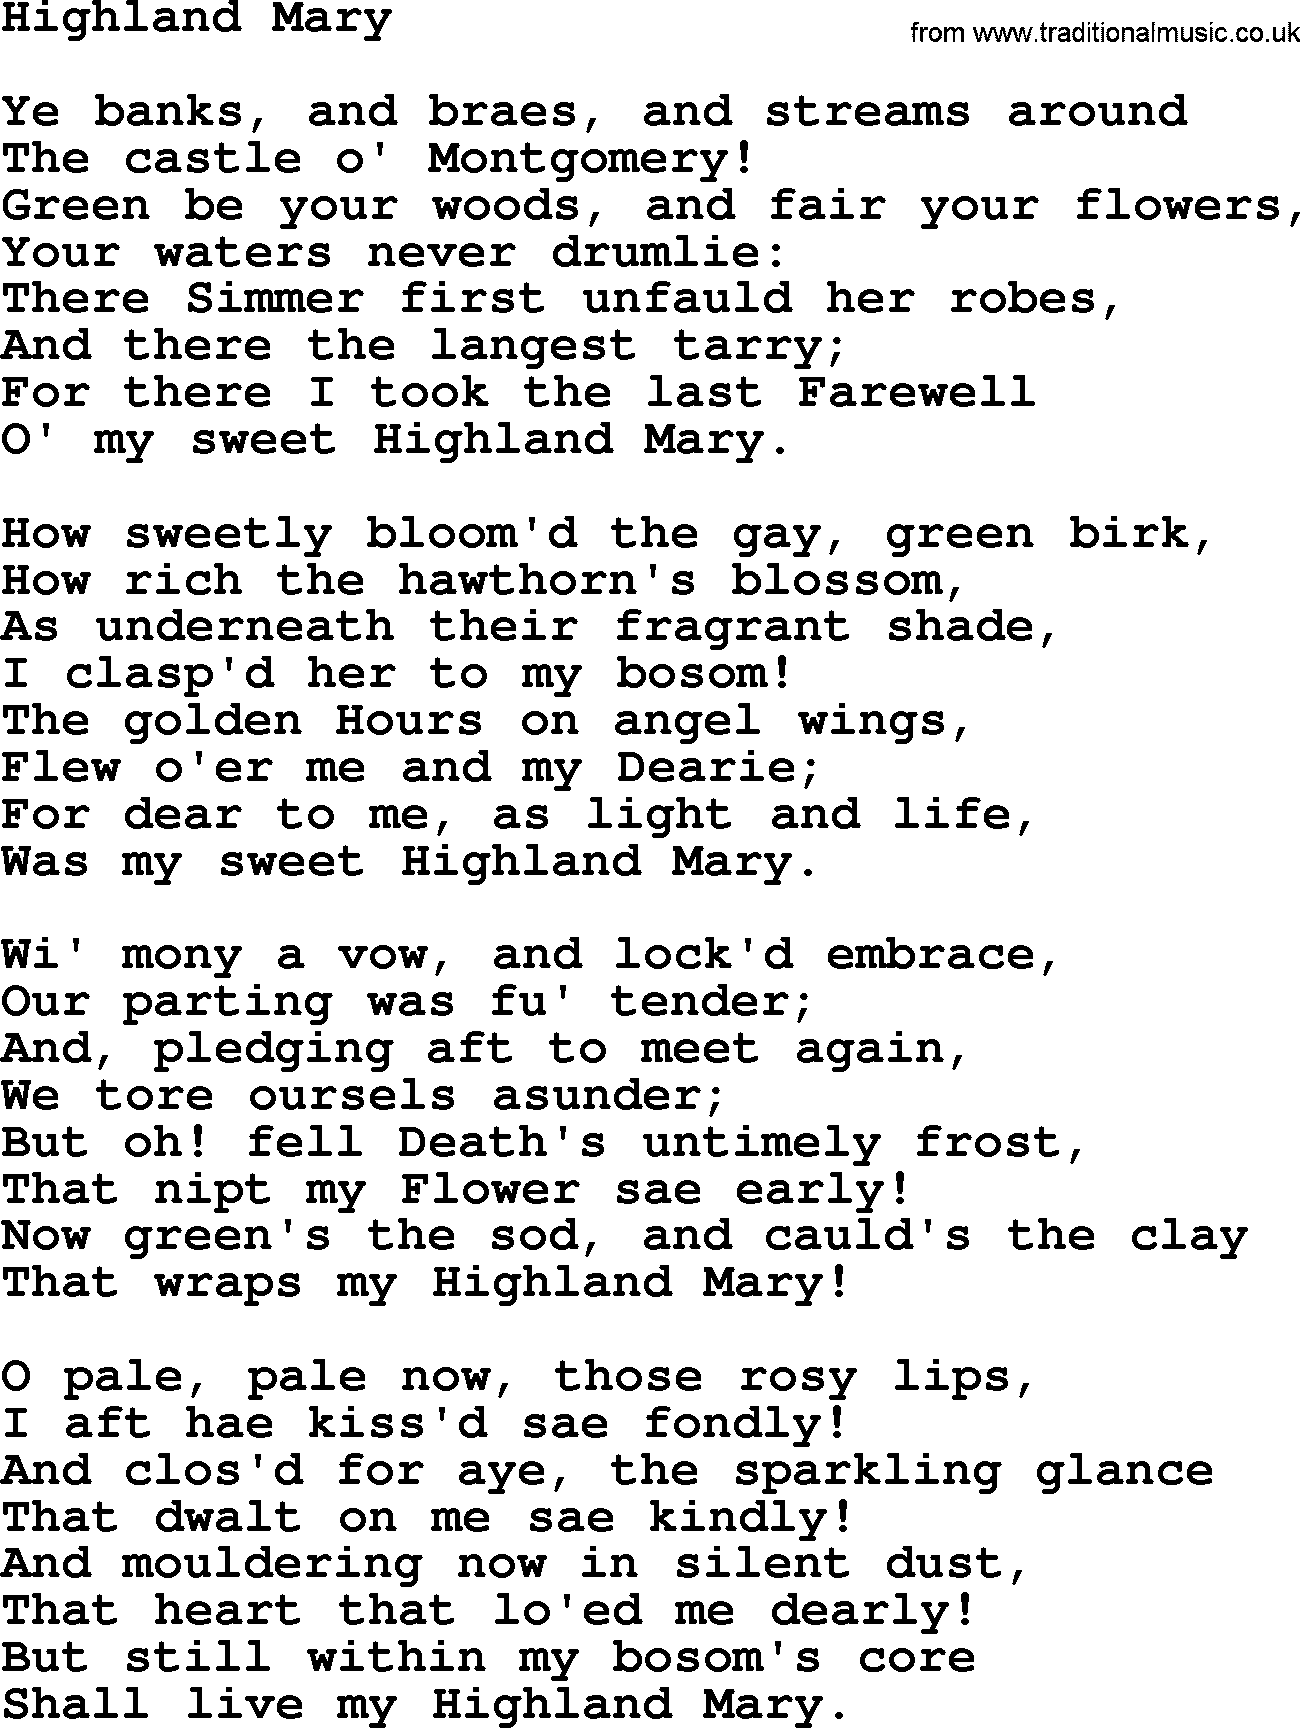 Robert Burns Songs & Lyrics: Highland Mary